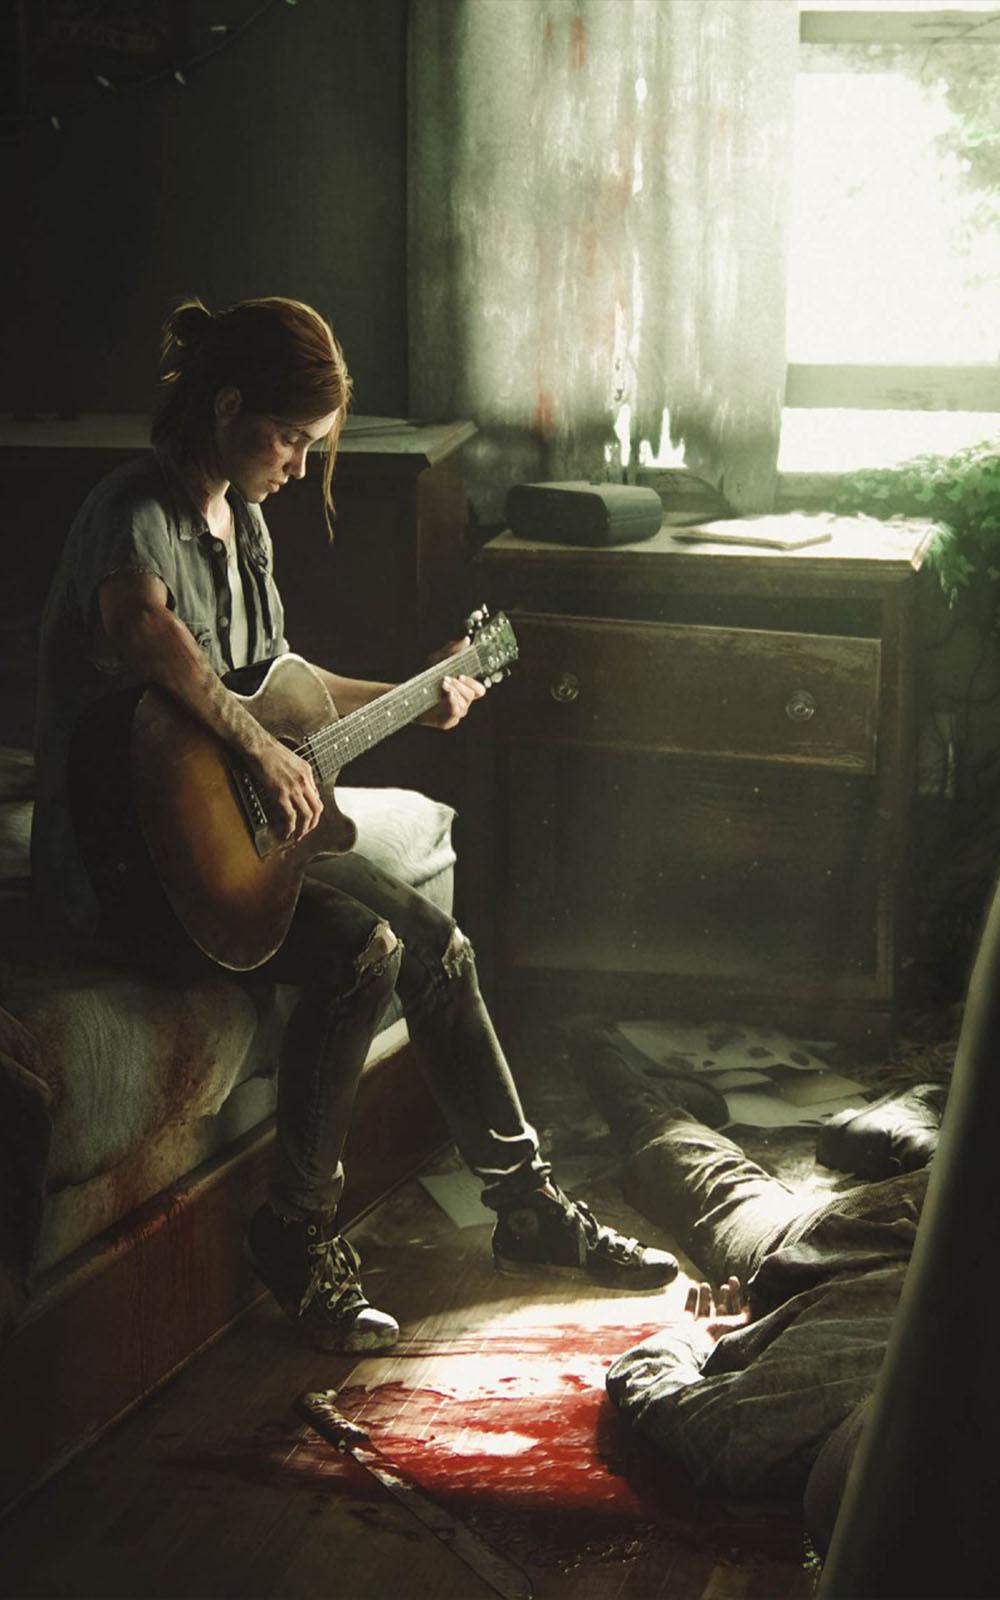 Ellie in The Last of Us 2 Free HD Mobile Wallpaper